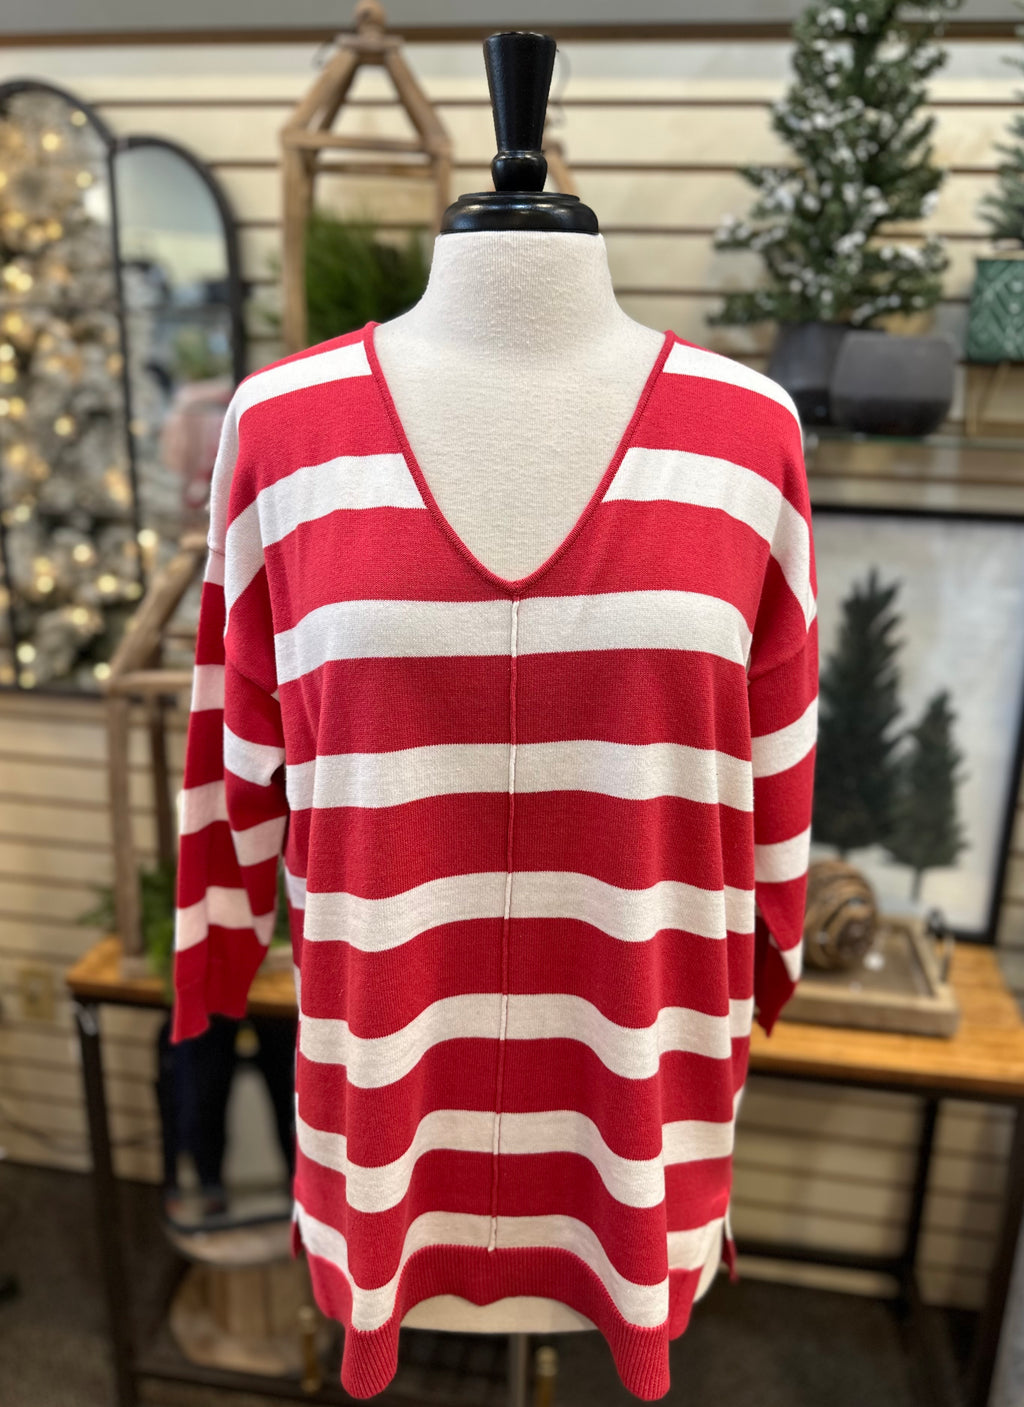 Keren Hart Cotton Striped Knit V-Neck Sweater